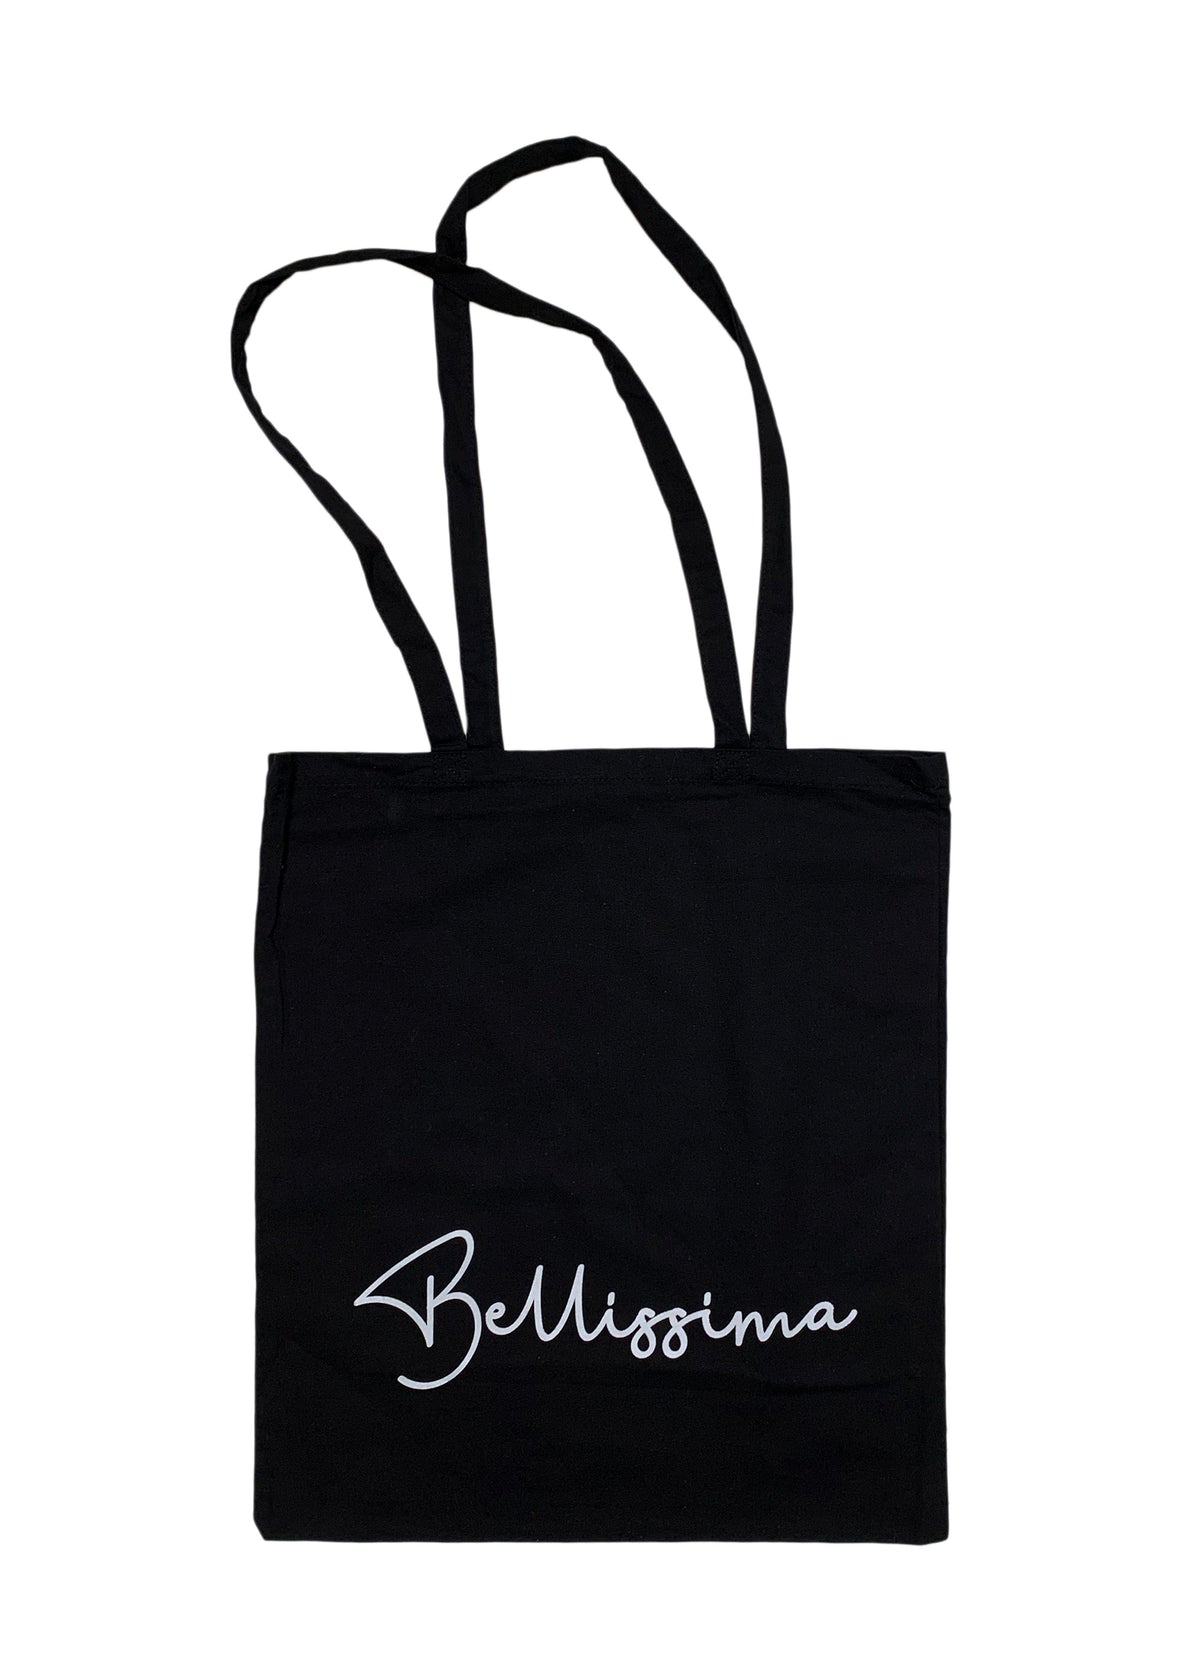 Bellissima bag